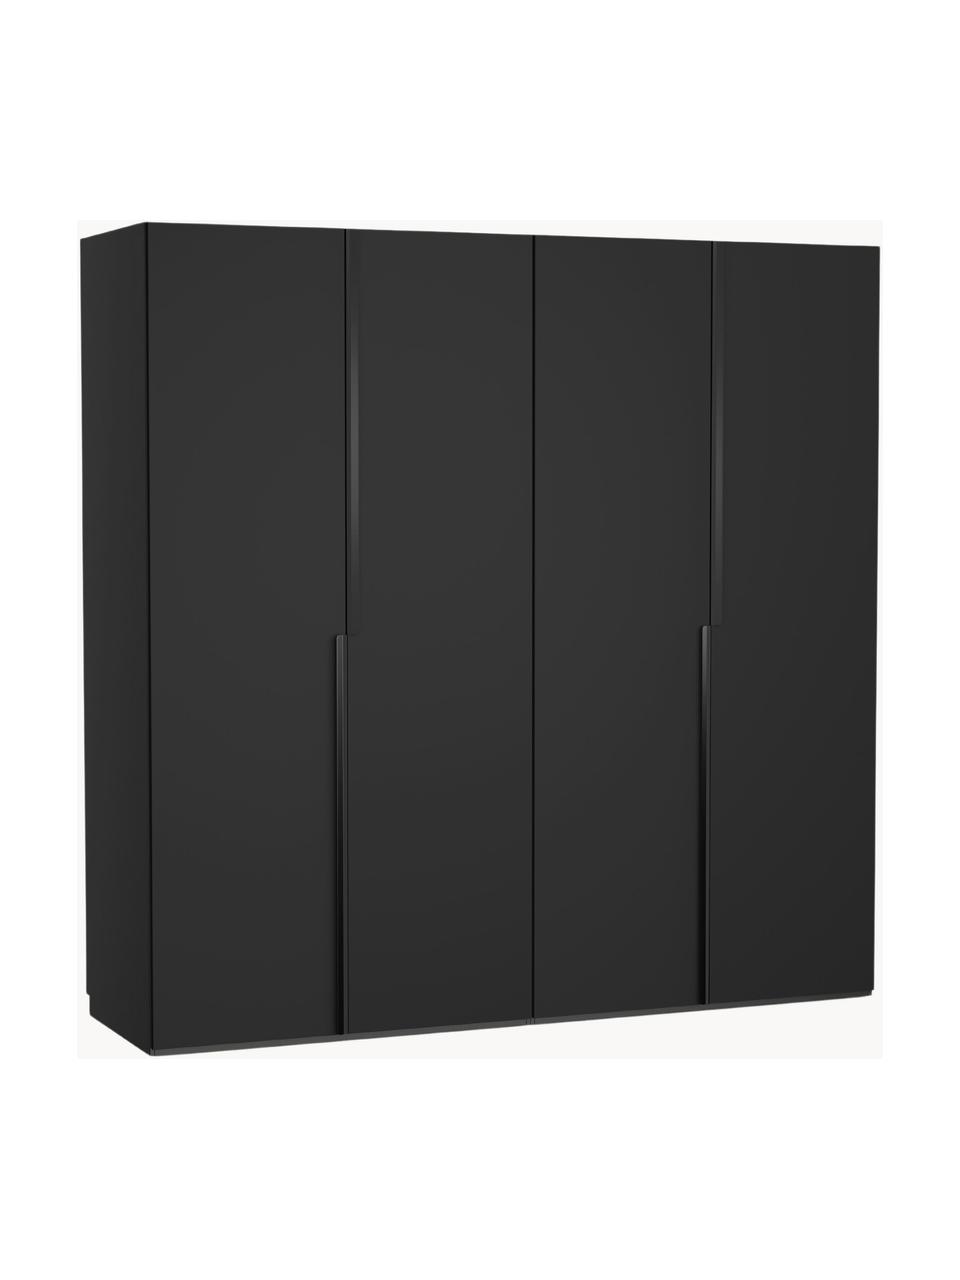 Modulární skříň s otočnými dveřmi Leon, šířka 200 cm, více variant, Černá, Interiér Basic, Š 200 x V 200 cm